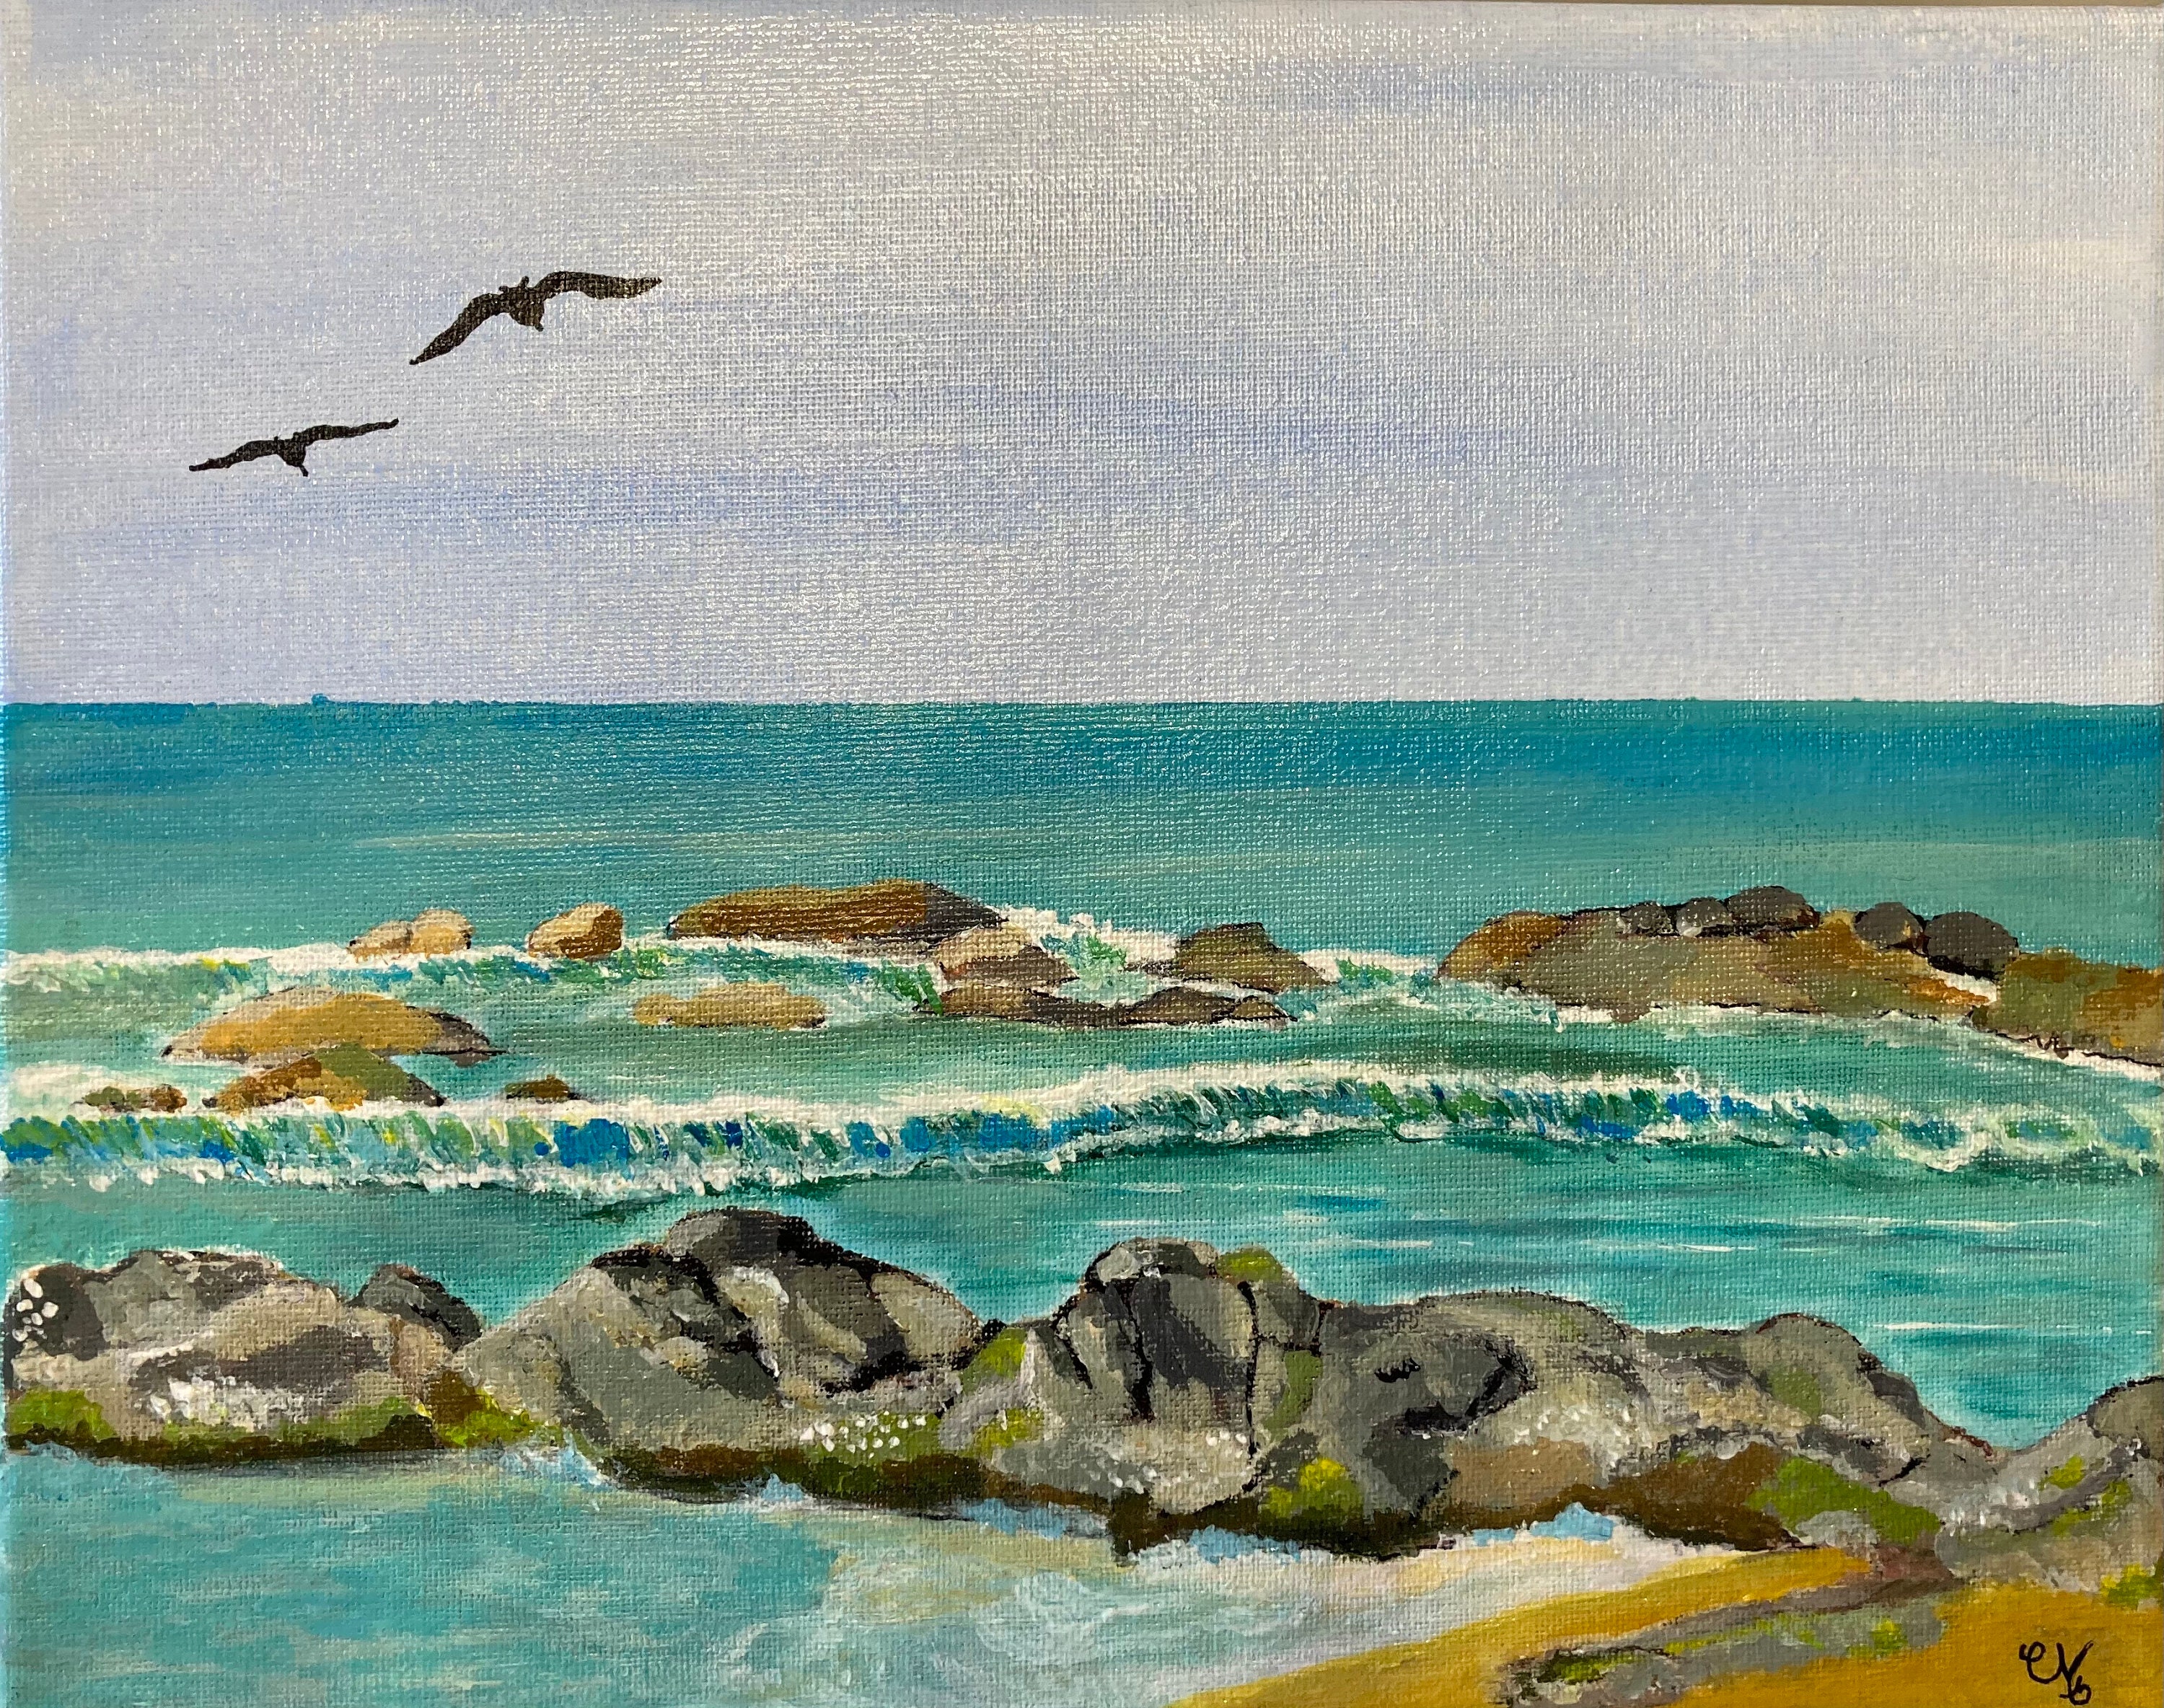 Tableau mer, paysage marin, bord de mer peinture sur toile